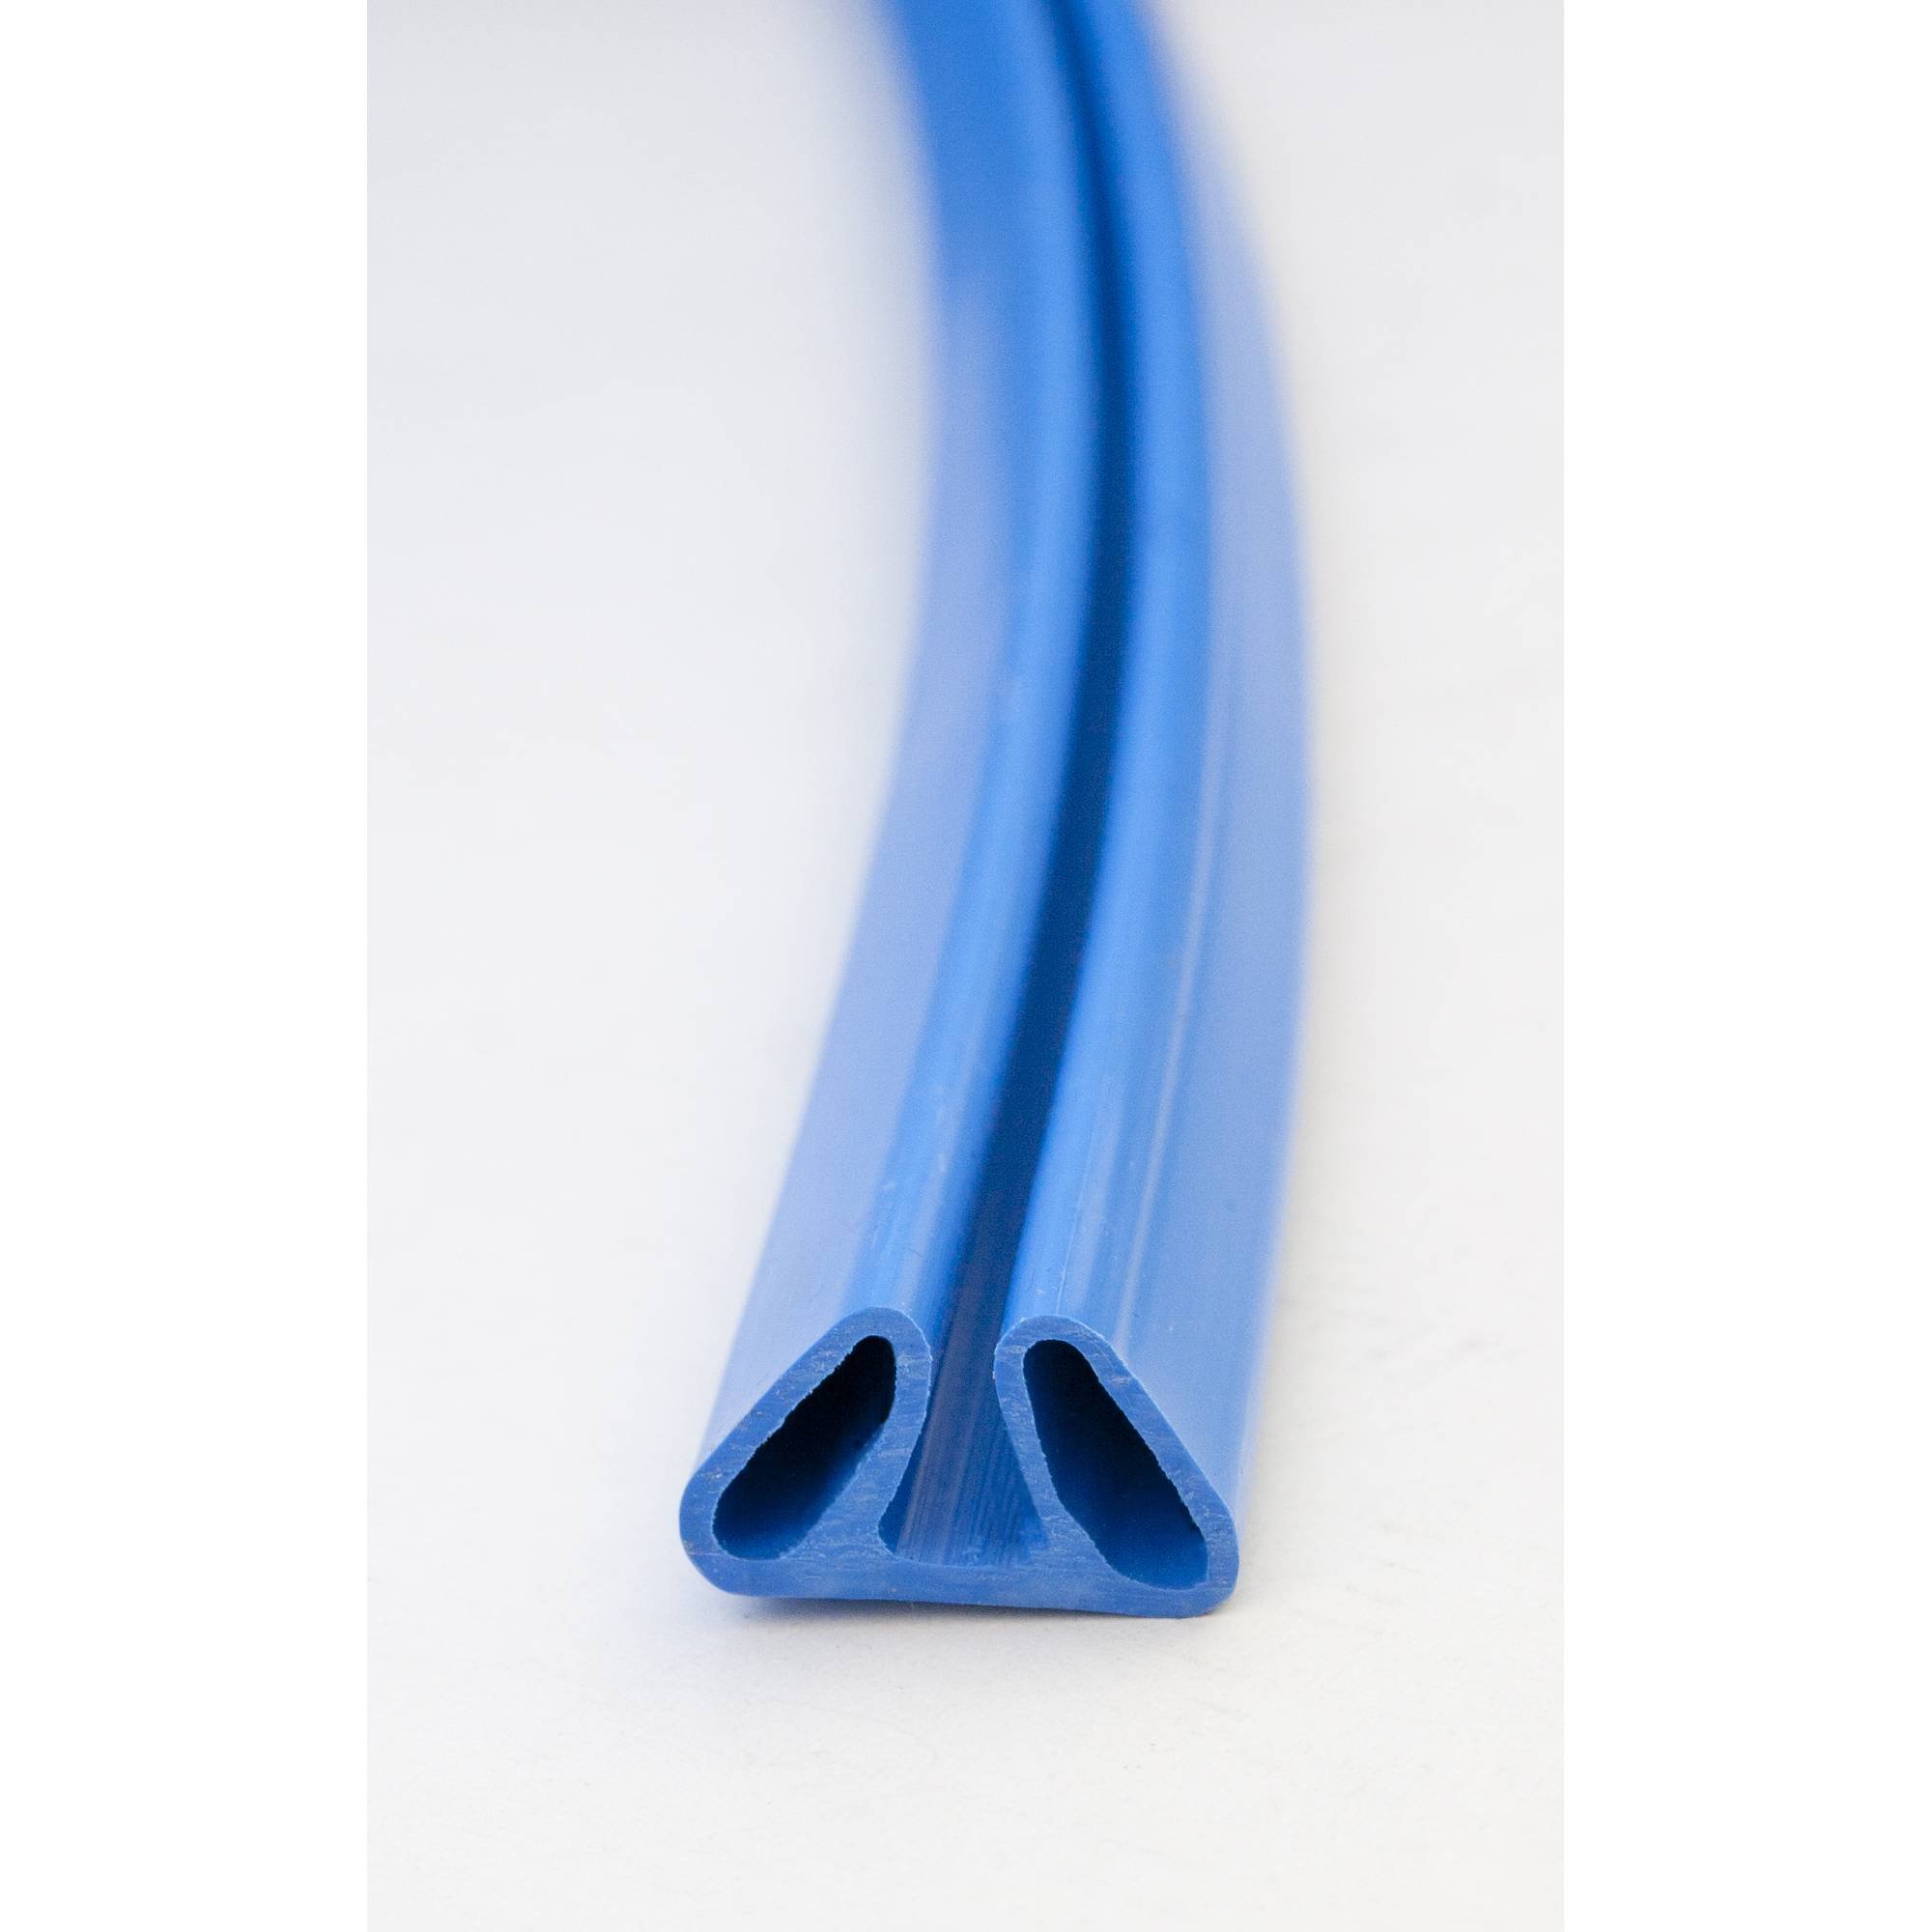 Stahlwandpool achtform Exklusiv 625x360x120 cm, Stahl 0,6 mm weiß, Folie 0,6 mm blau, Einhängebiese